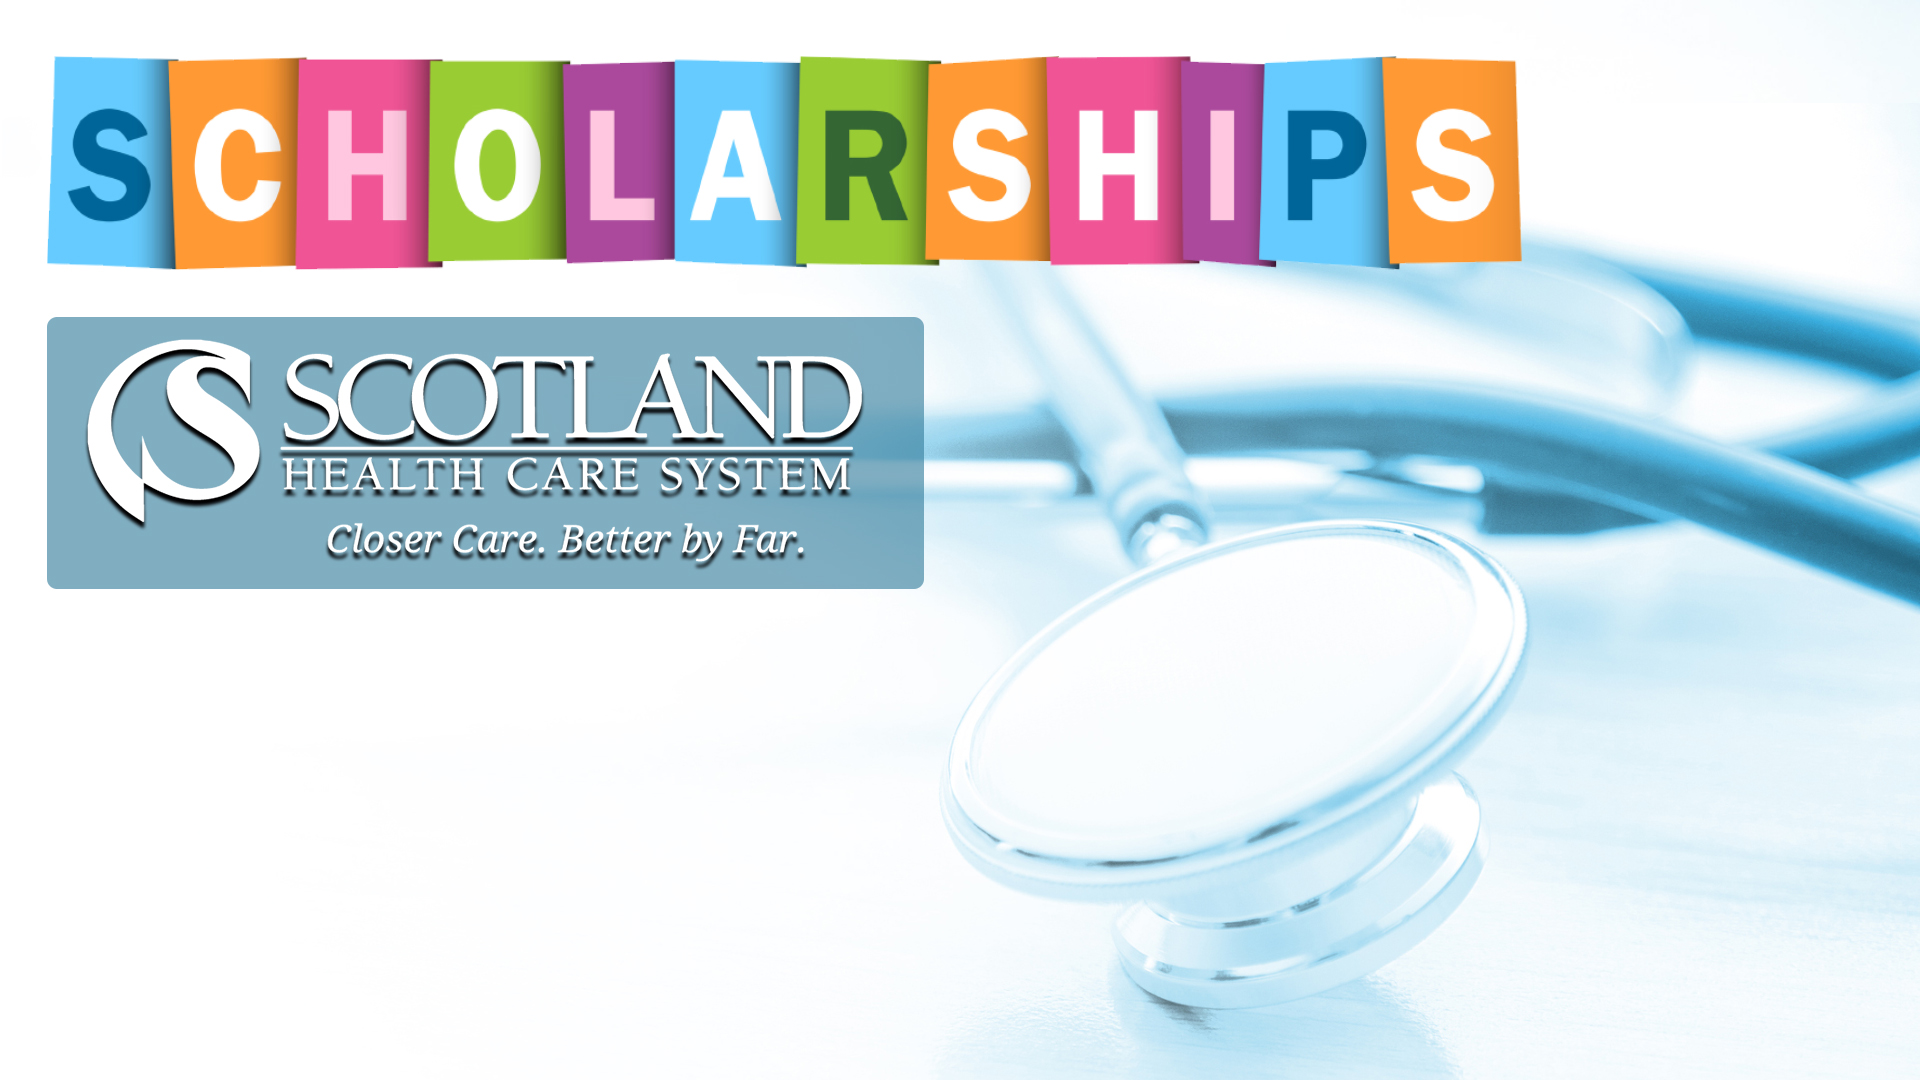 Scholarship word art and Scotland Health Care System logo